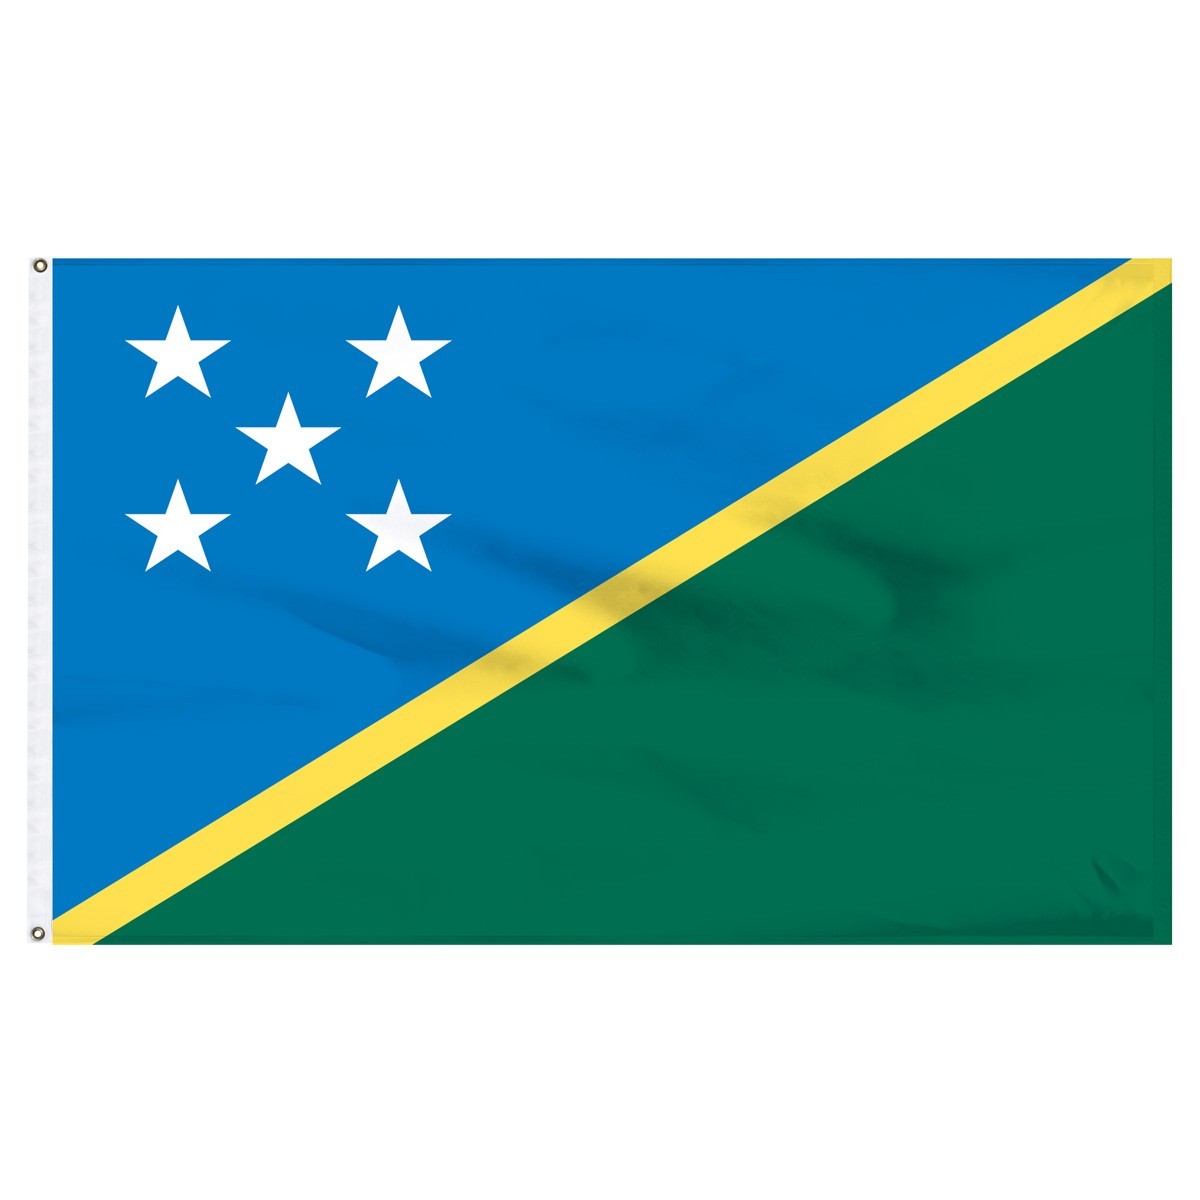 Solomon Islands 2' x 3' Outdoor Nylon Flag